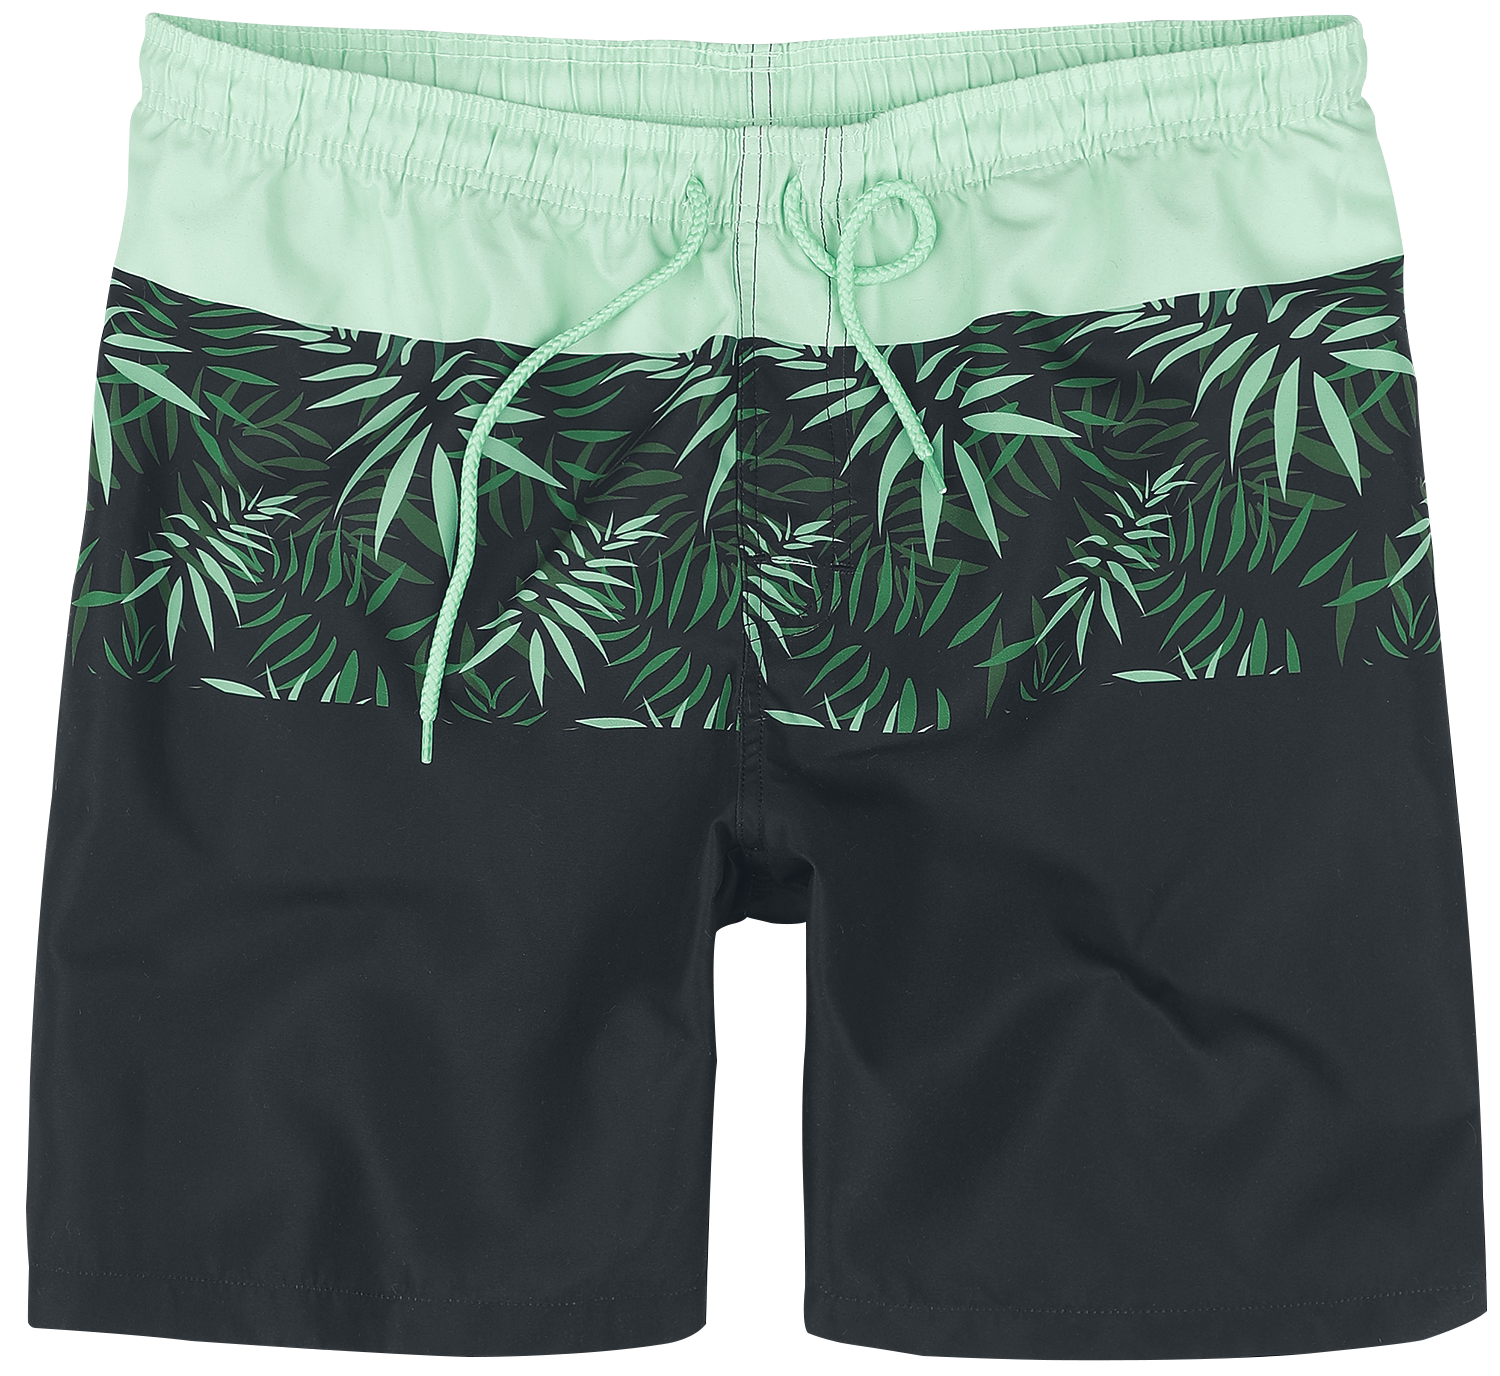 RED by EMP - Swim Shorts With Palm Trees - Badeshort - schwarz| grün - EMP Exklusiv!